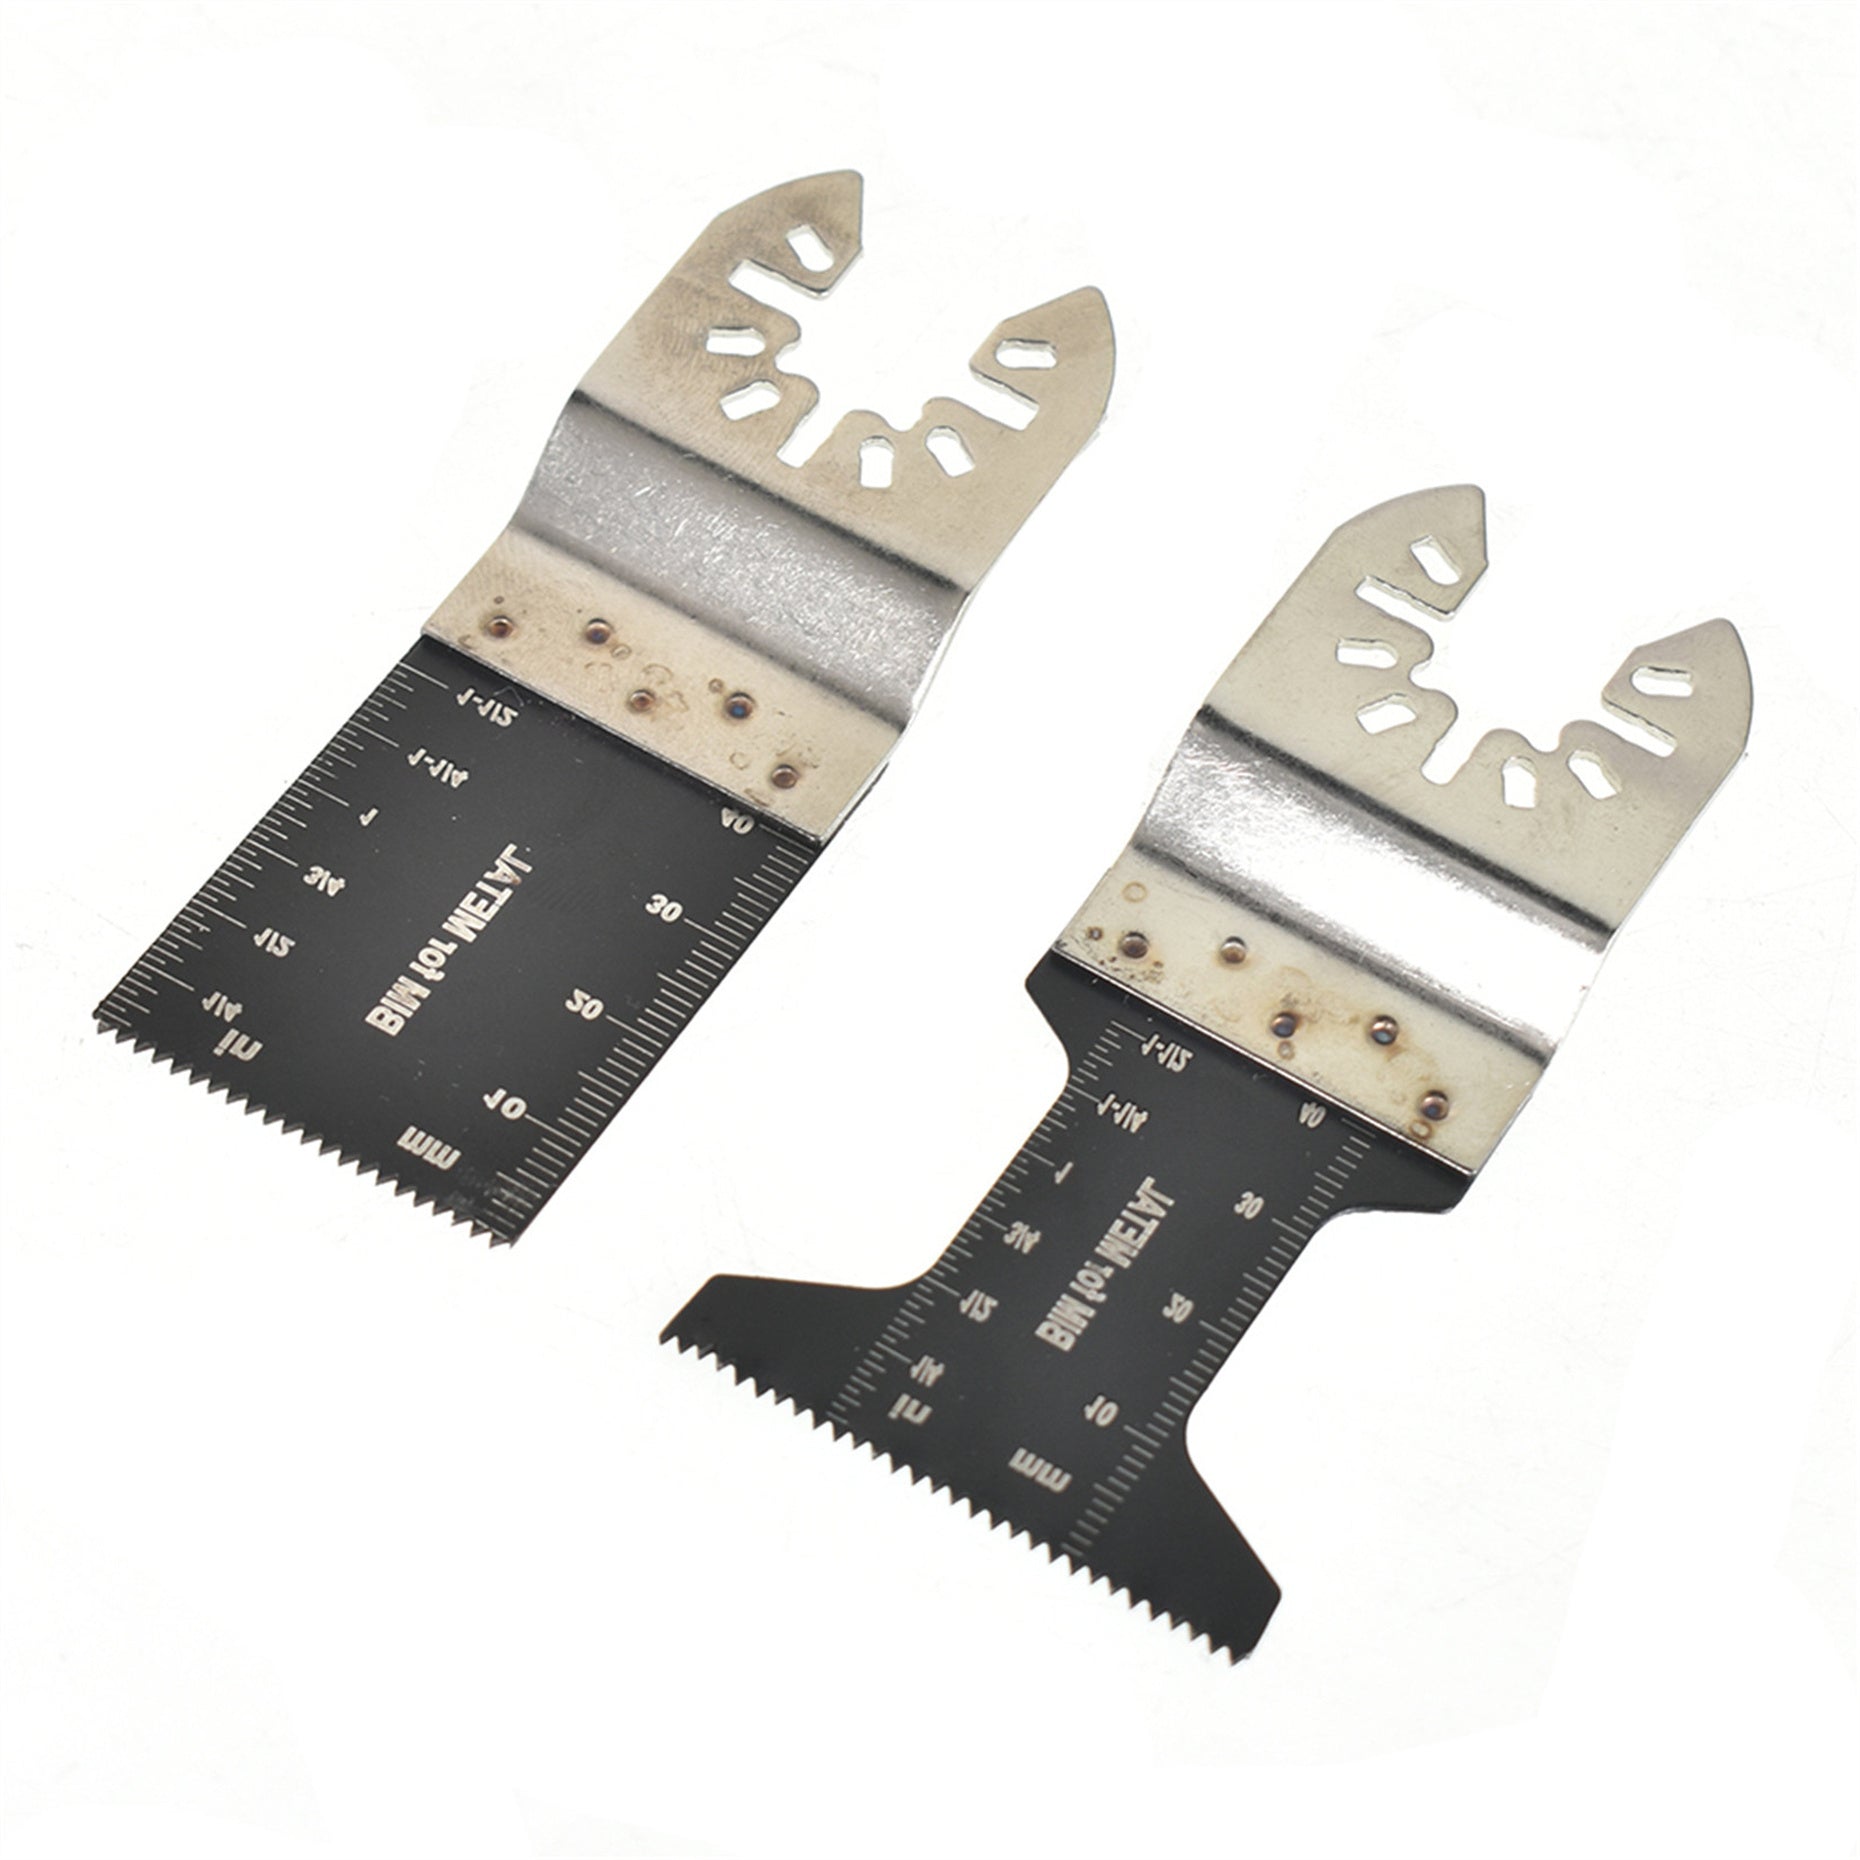 60Pcs Oscillating Saw Blade 1.75 "- 3.5" For Cutting Wood Plastic Soft Metal FINDMALLPARTS